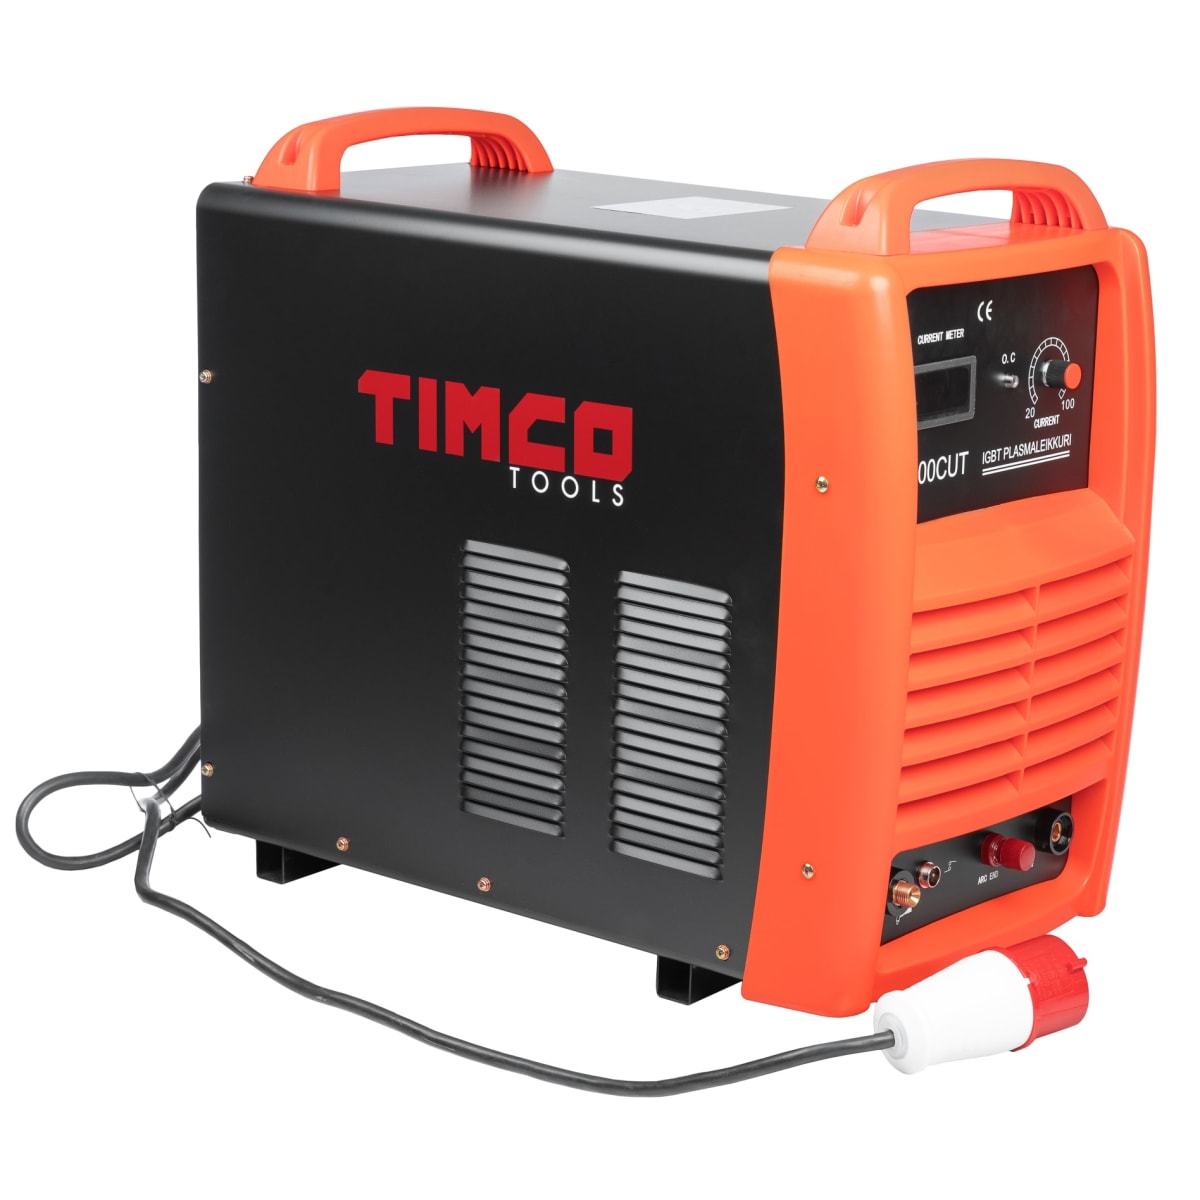 Timco PI100CUT max 35 mm plasmaleikkuri  verkkokauppa